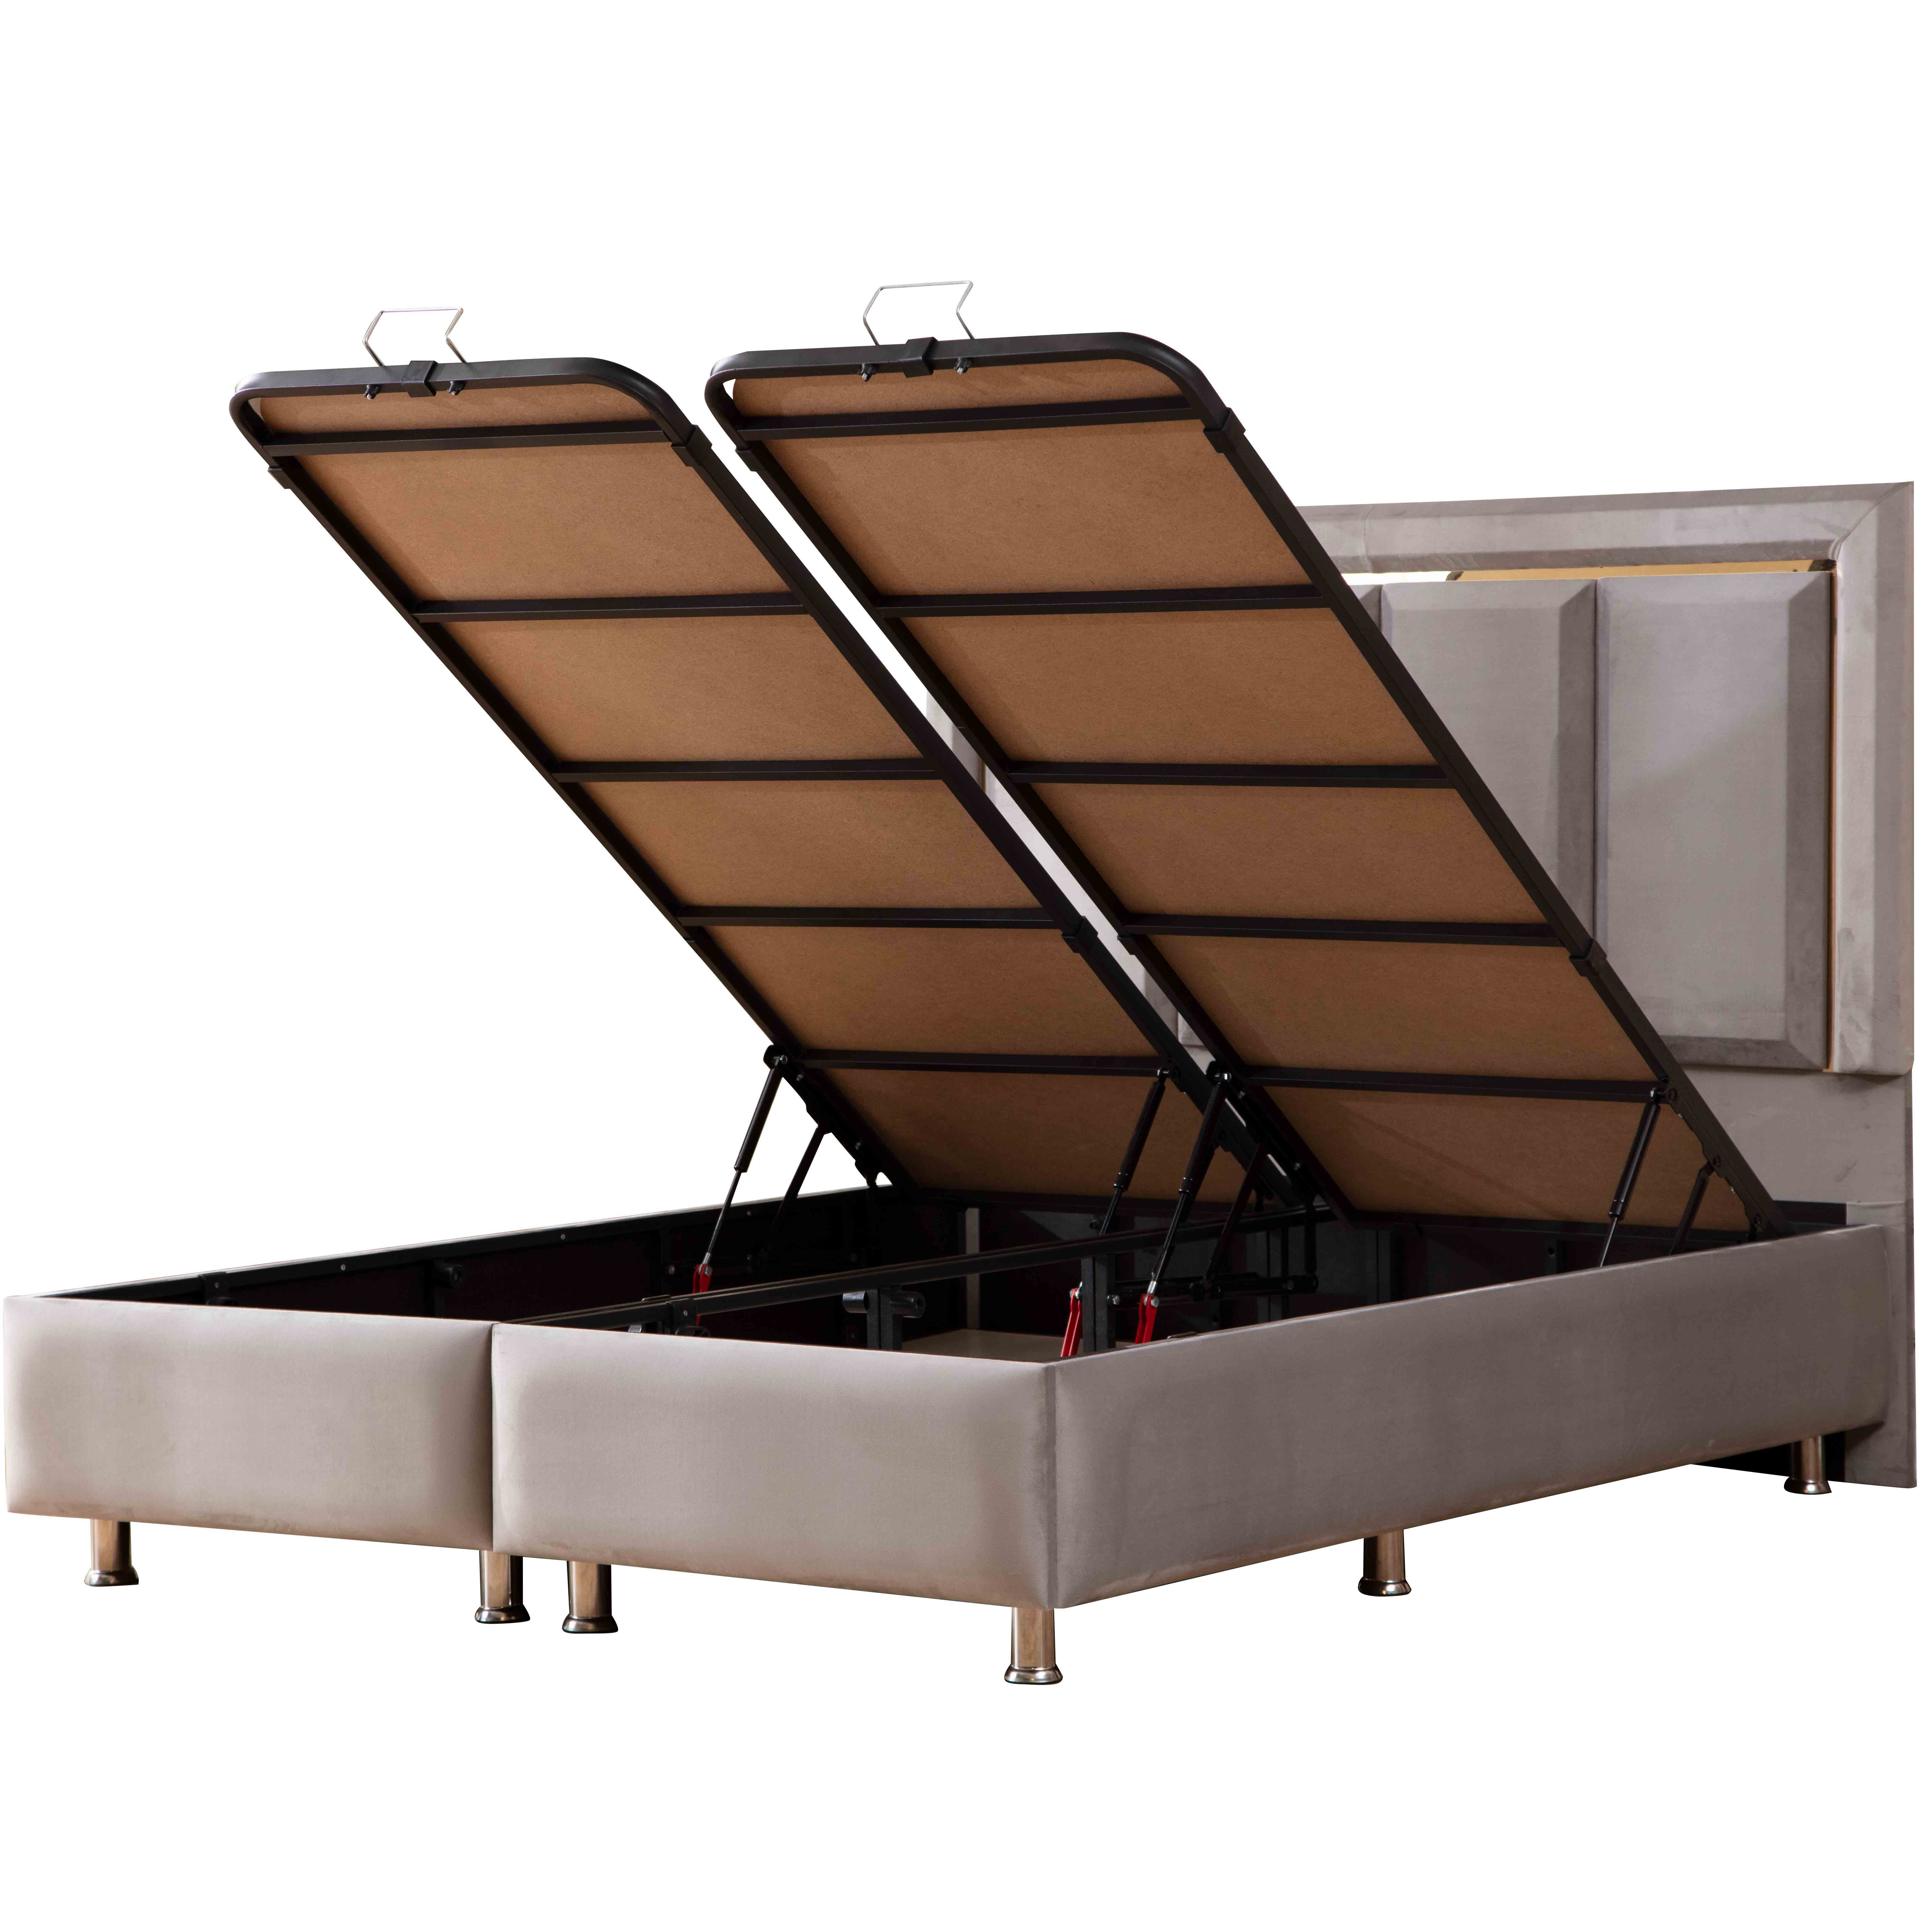 Bergama Bed With Storage 120x200 cm